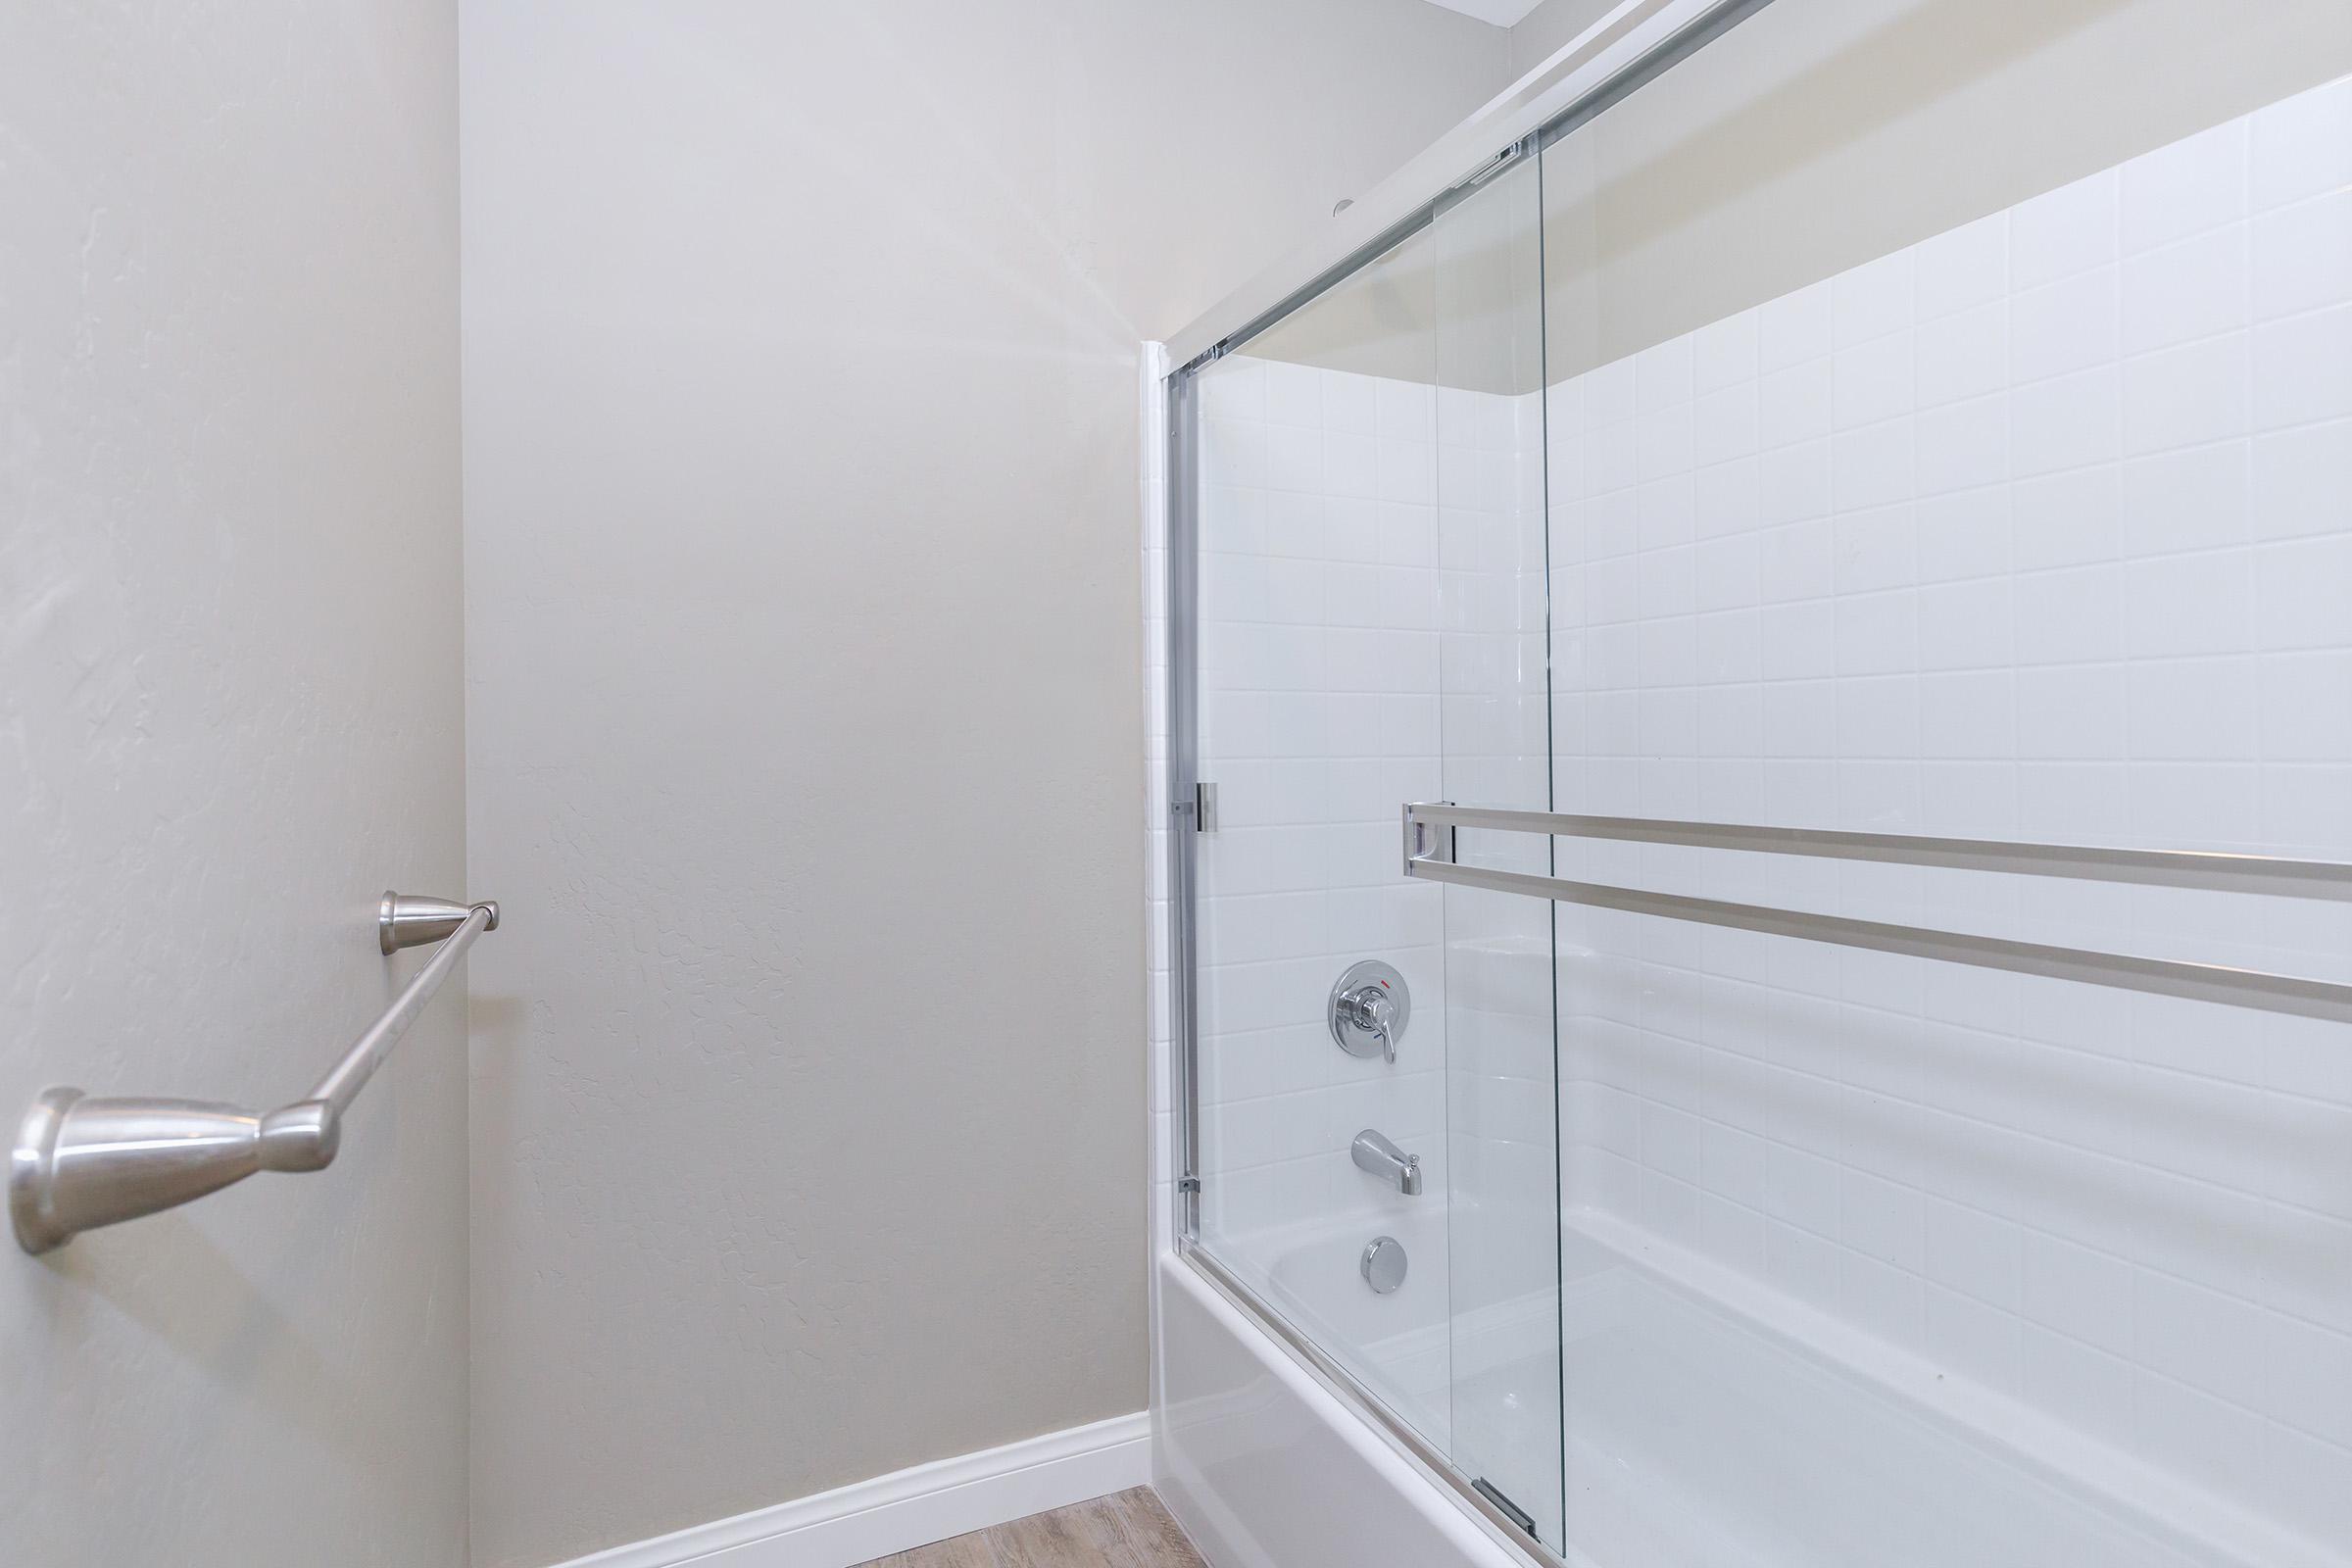 Bathroom shower with sliding glass shower doors